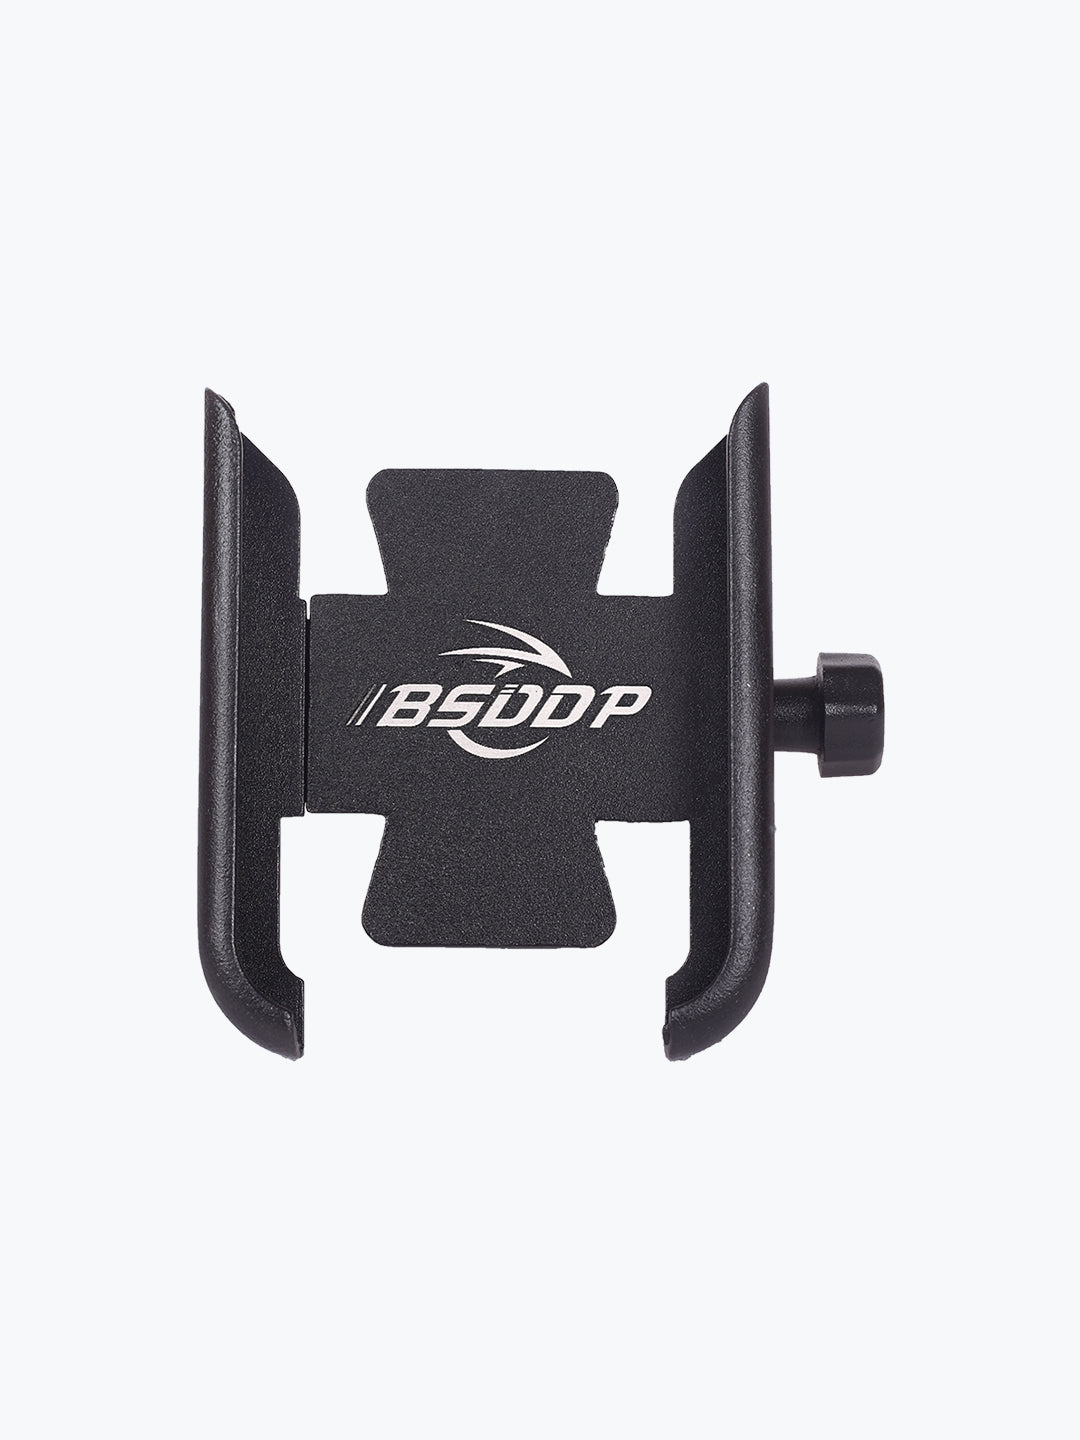 BSDDP Metal Handle Mount Holder G0122 Black